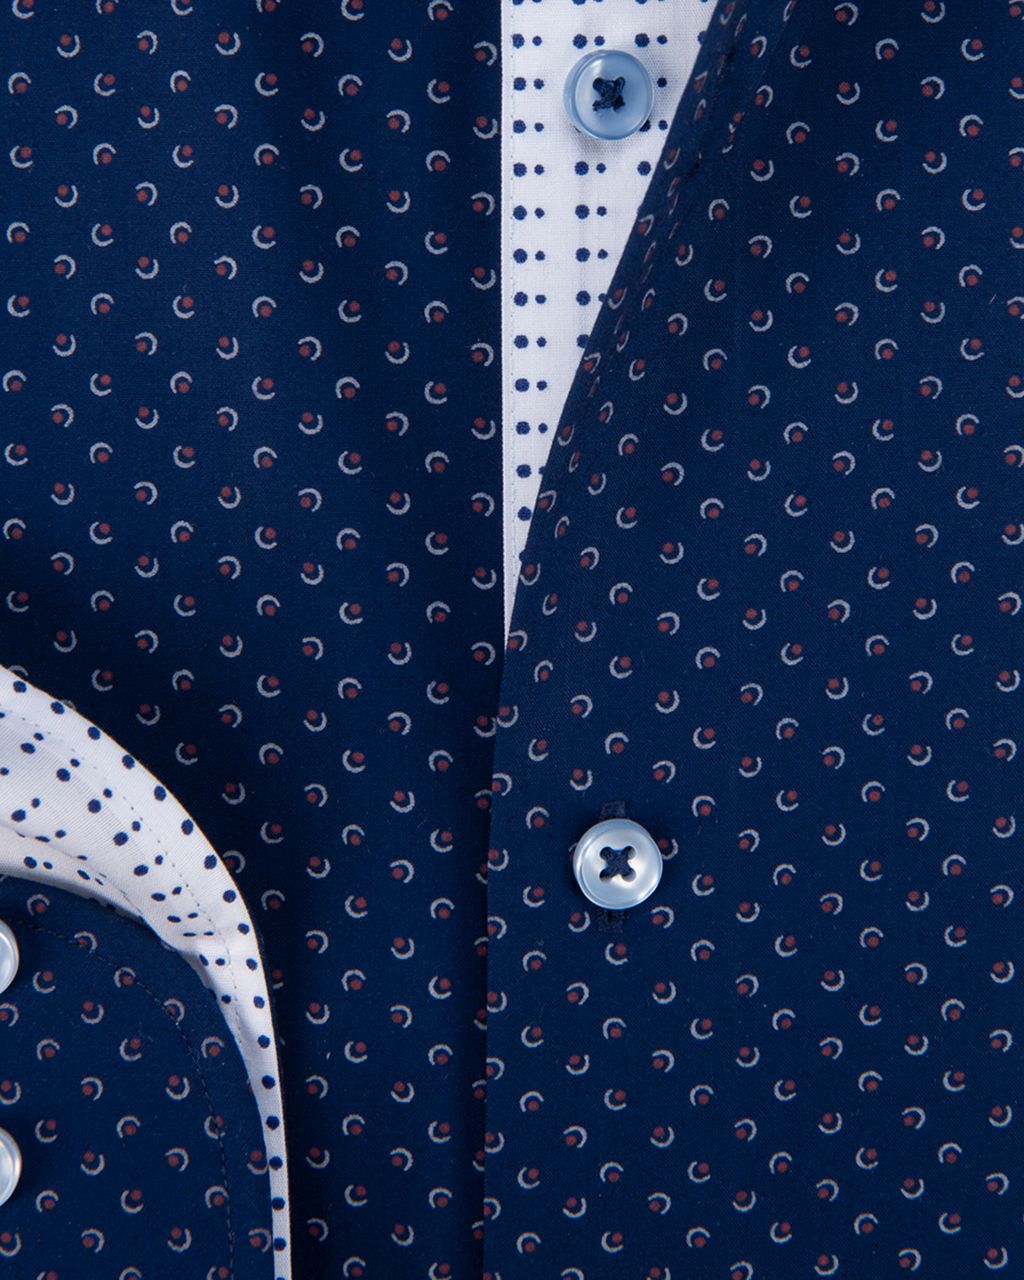 The BLUEPRINT Premium Trendy overhemd LM Donkerblauw dessin 053555-001-L